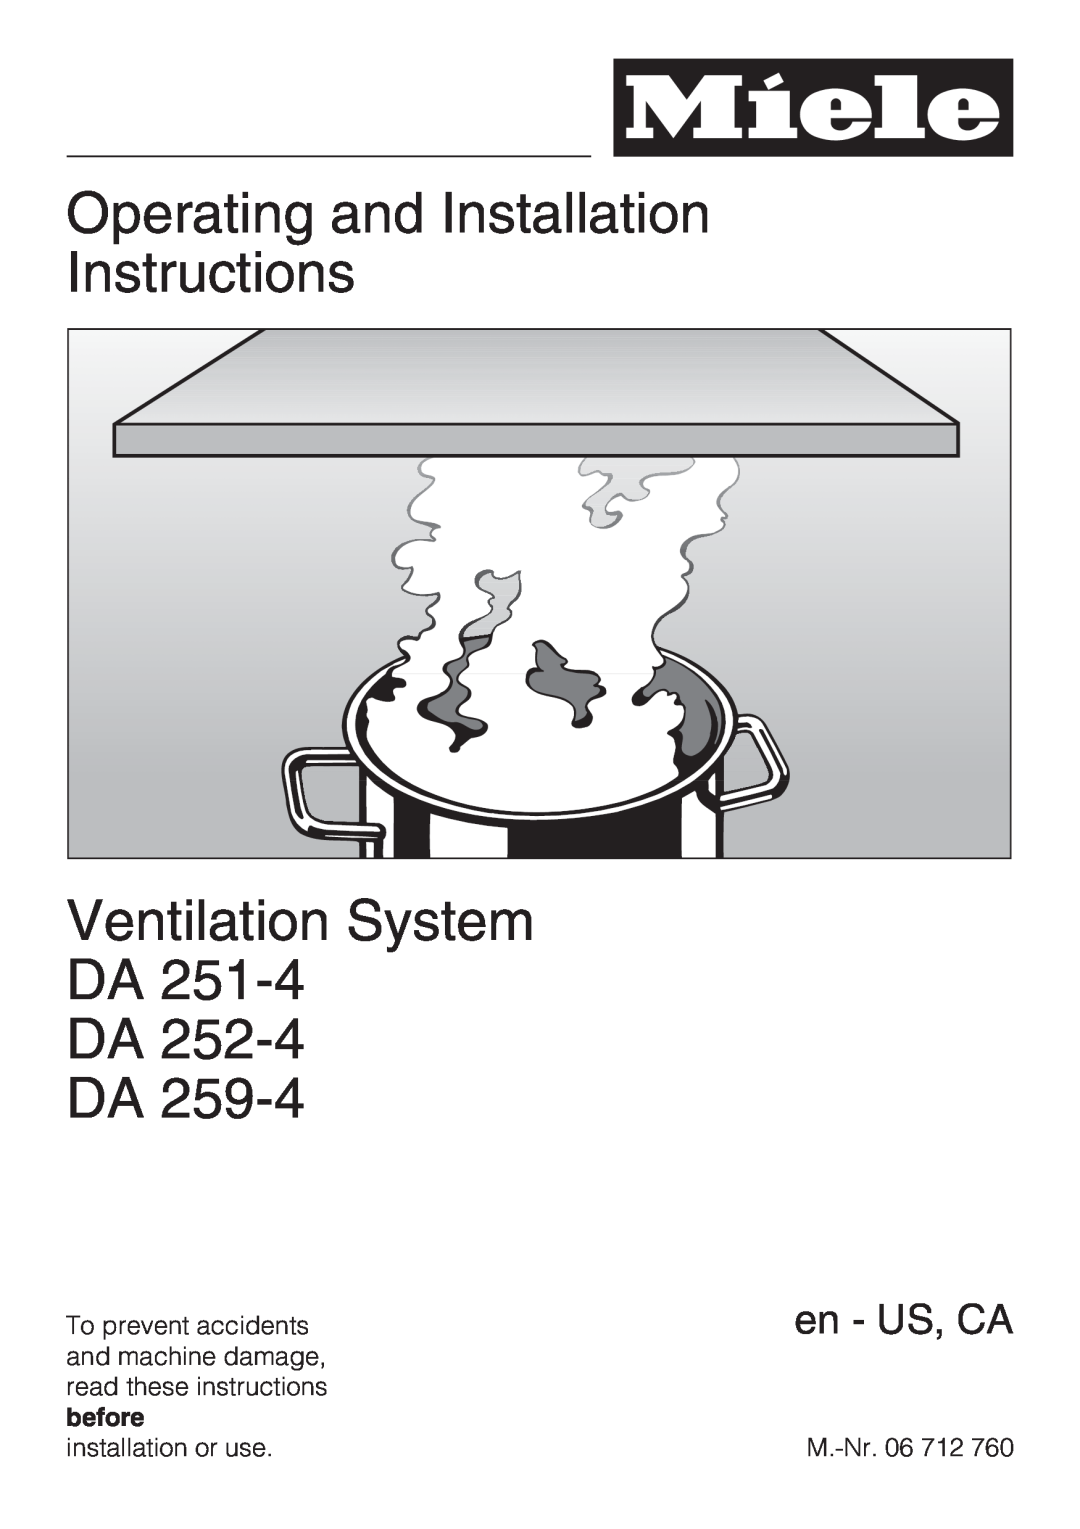 Miele DA259-4 installation instructions Operating and Installation Instructions, Ventilation System DA DA DA, en - US, CA 